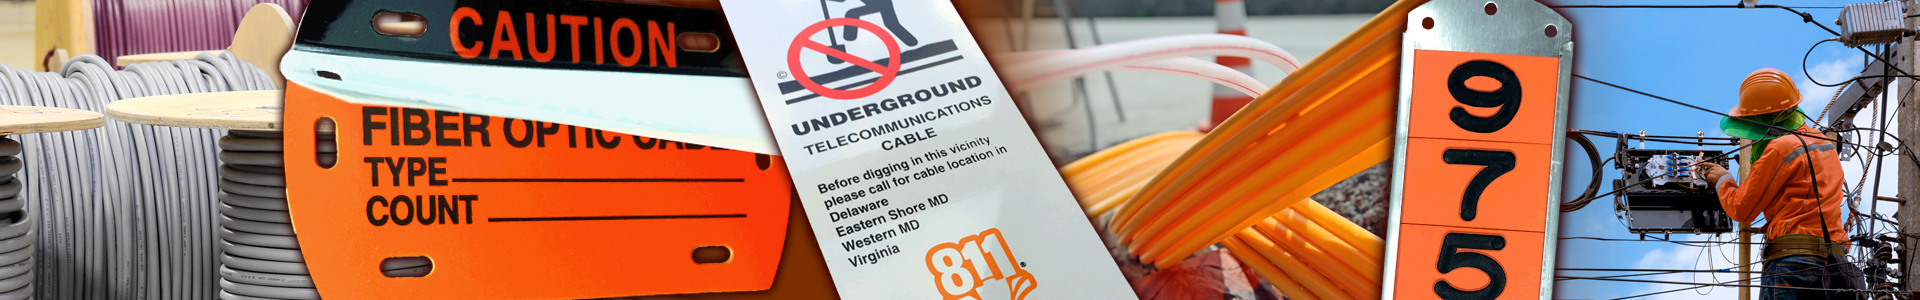 Telecom Safety Signage for Underground Installation